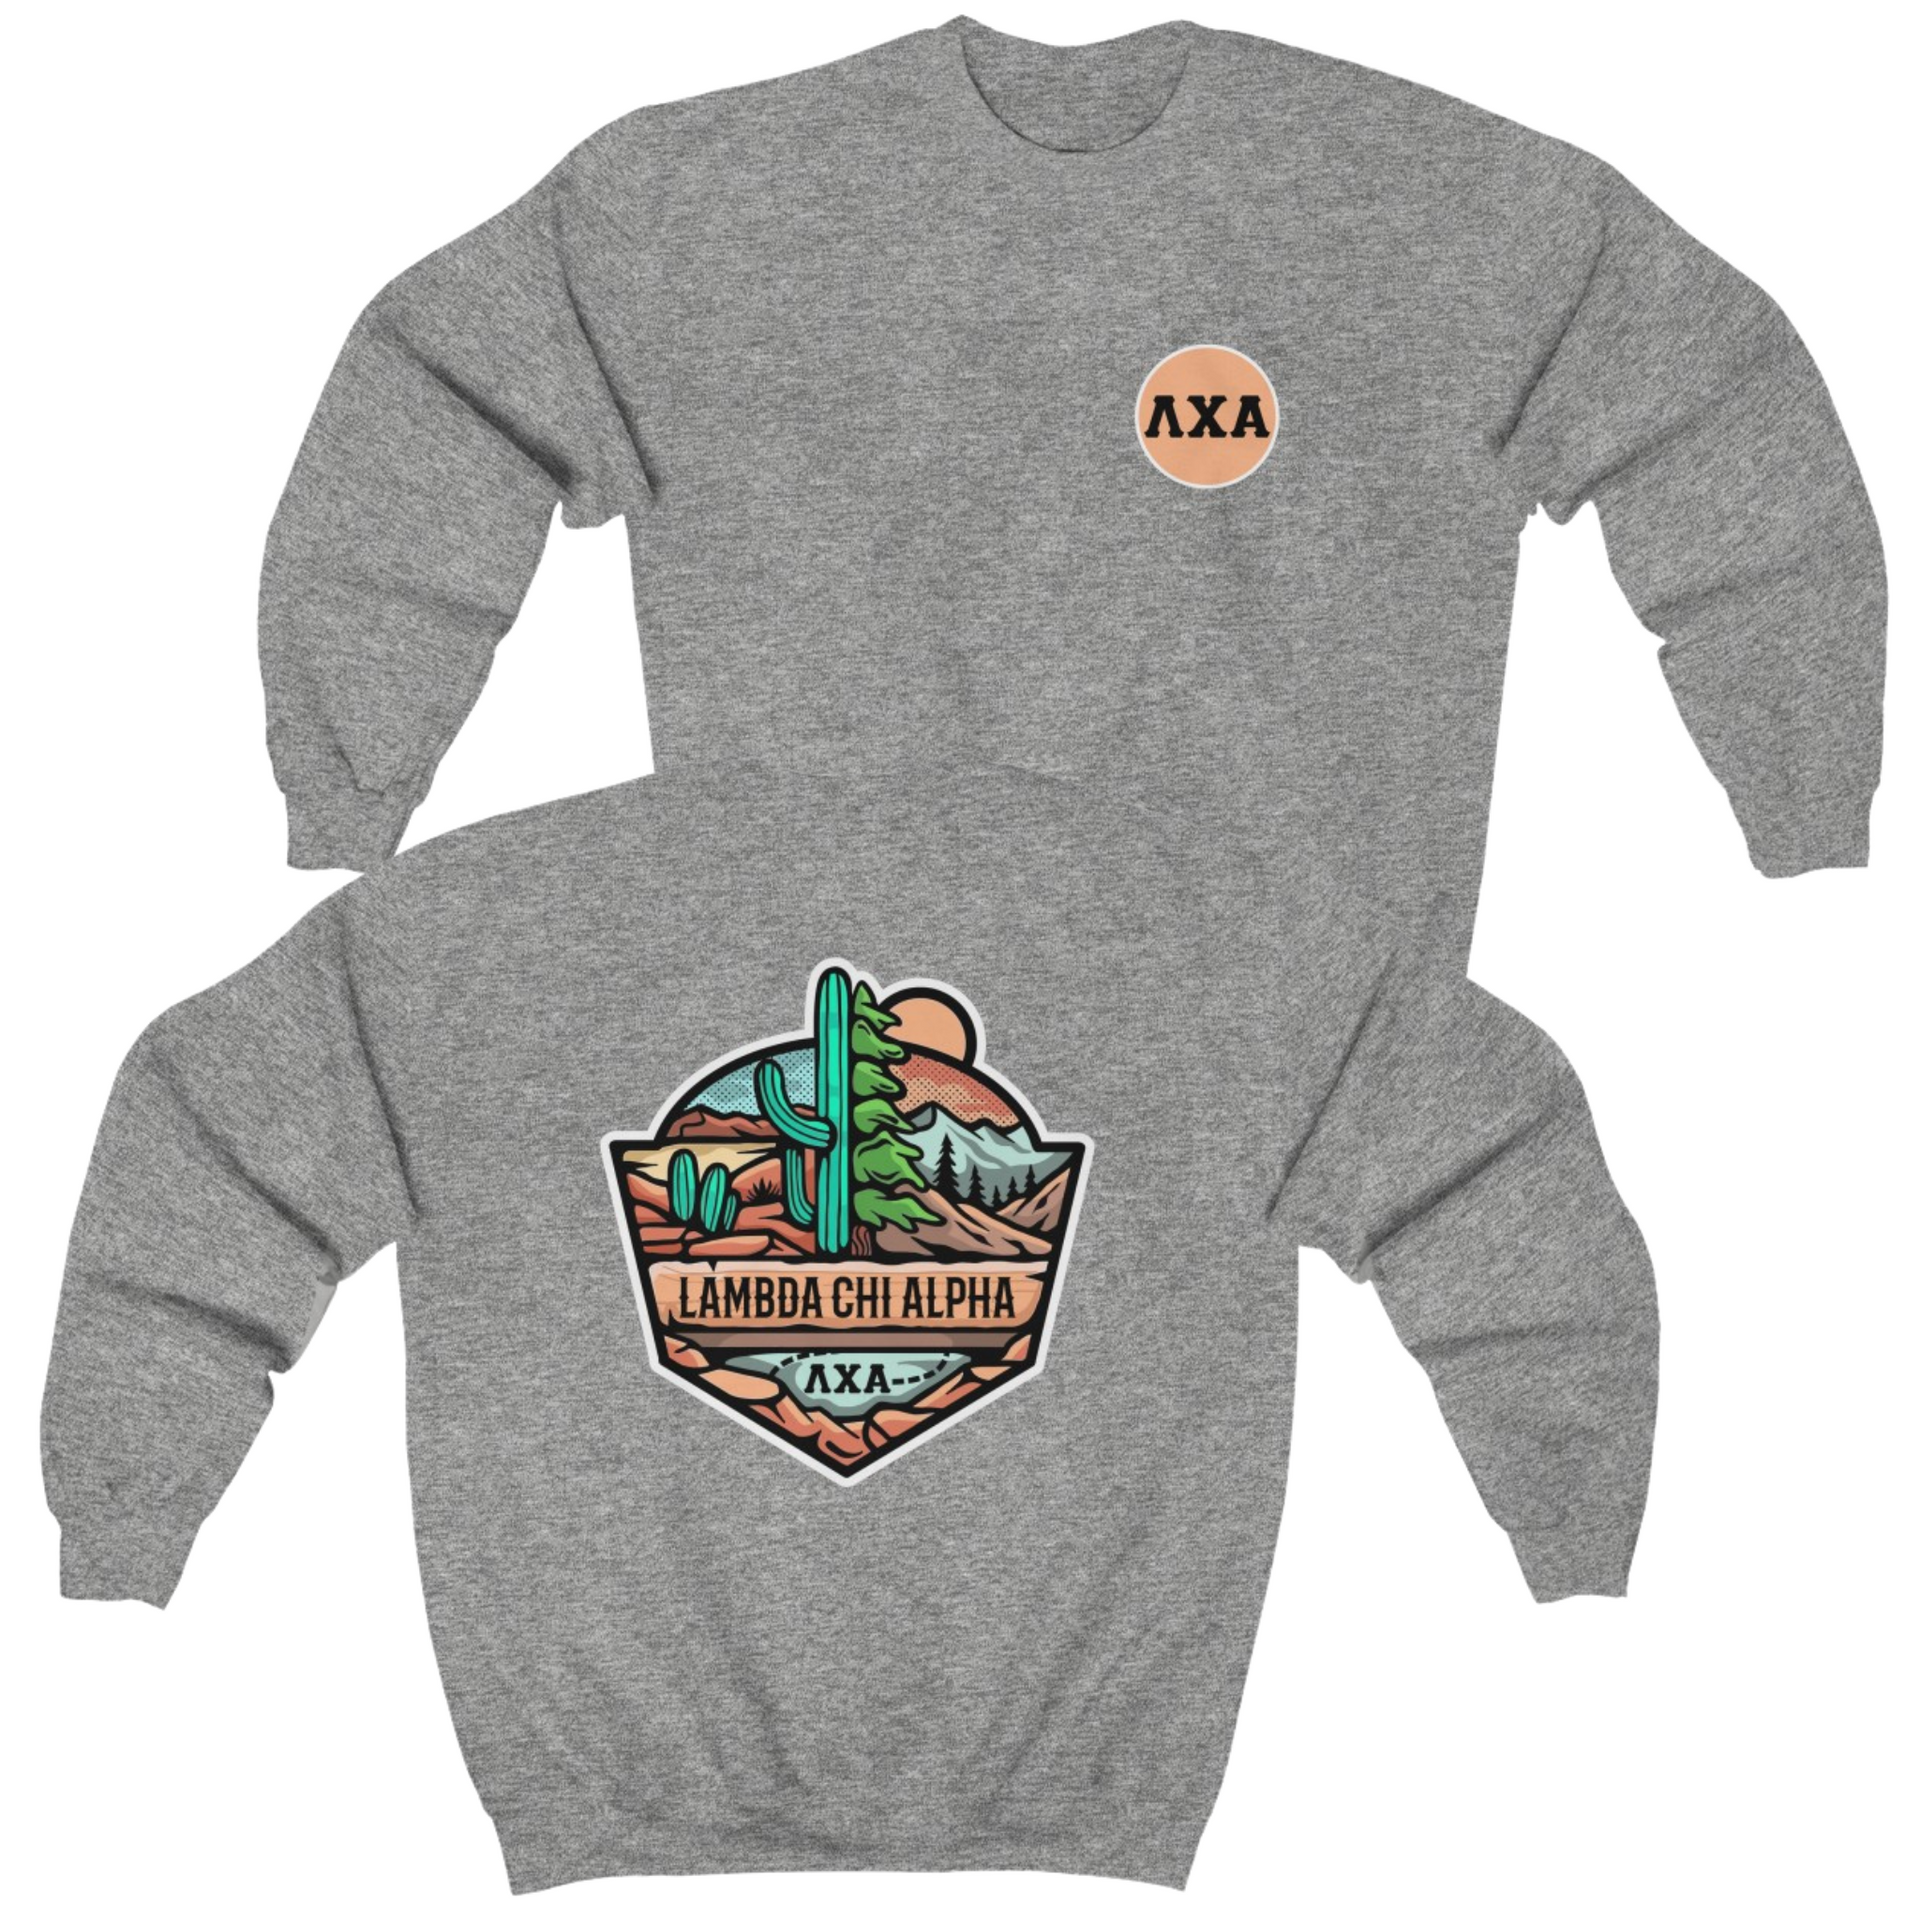 Grey Lambda Chi Alpha Graphic Crewneck Sweatshirt | Desert Mountains | Lambda Chi Alpha Fraternity Apparel 